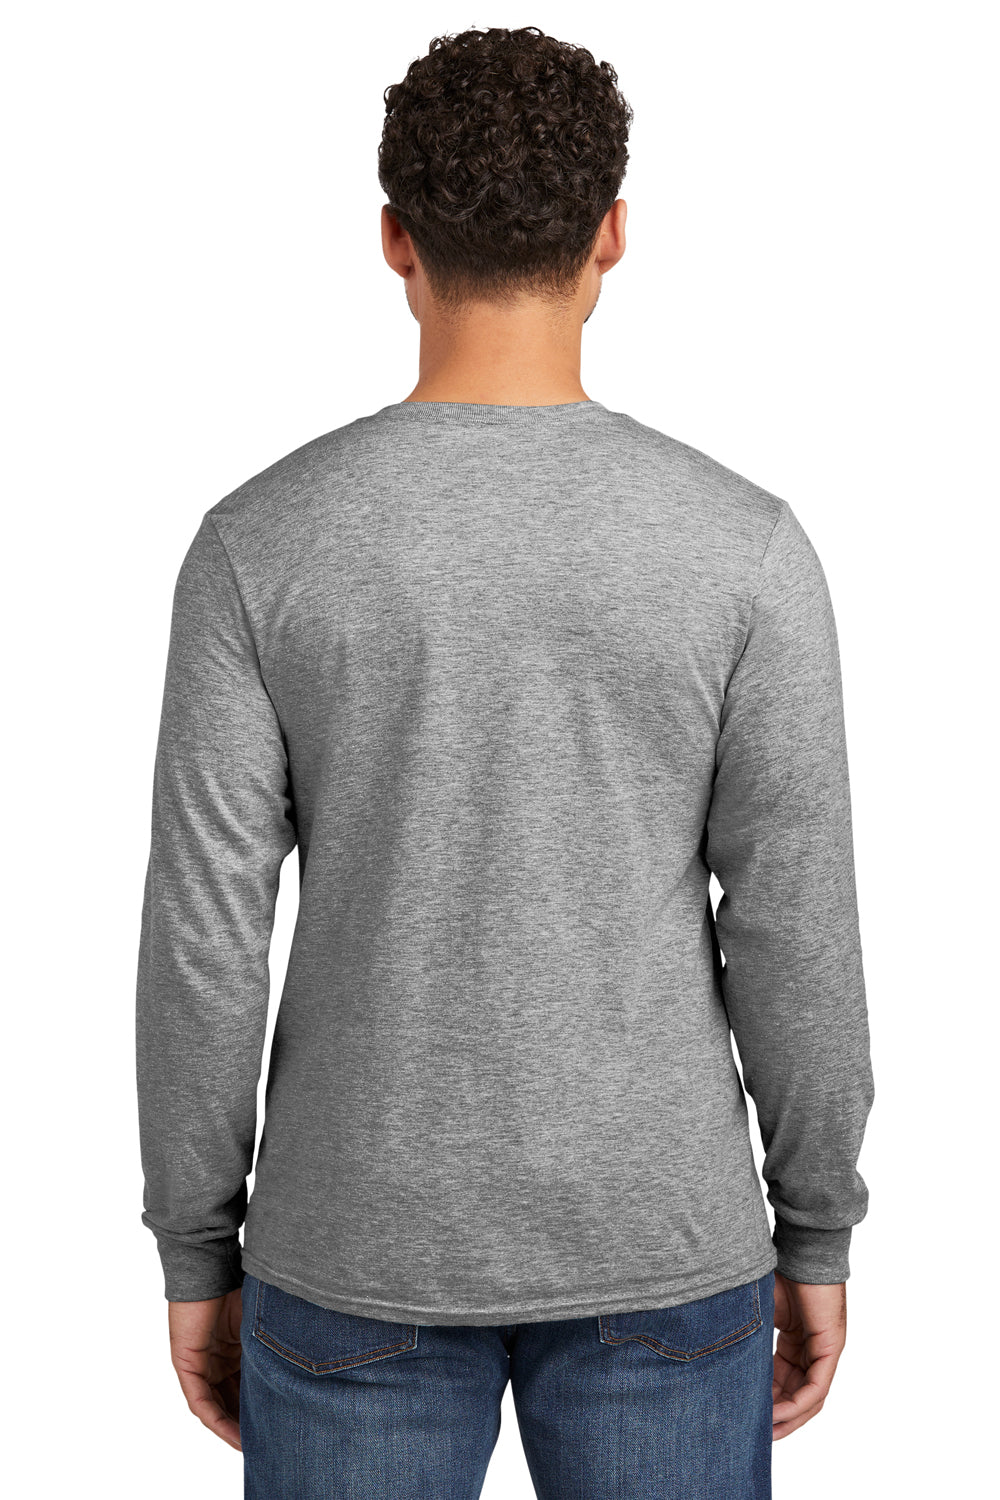 Jerzees 560LS Mens Premium Blend Ring Spun Long Sleeve Crewneck T-Shirt Oxford Grey Back